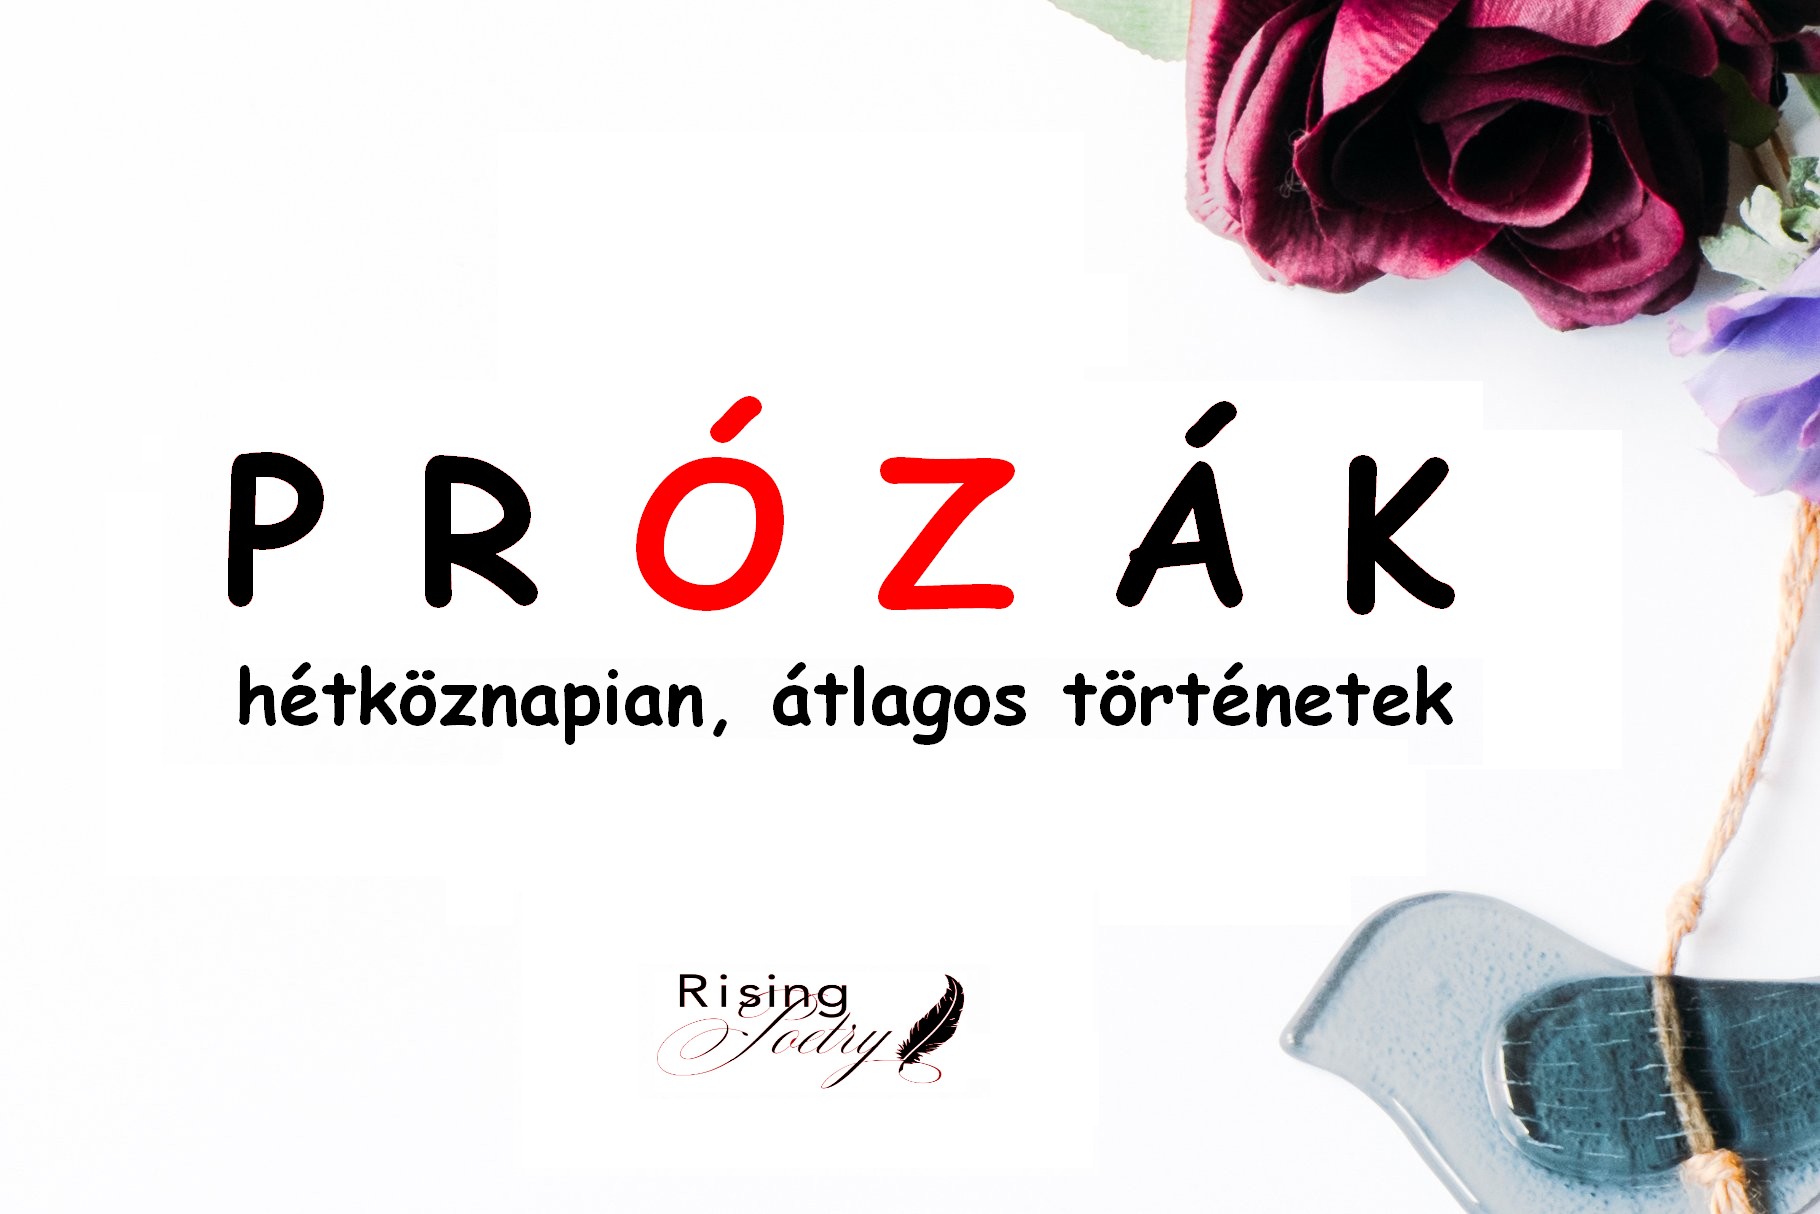 rising poetry - prózák